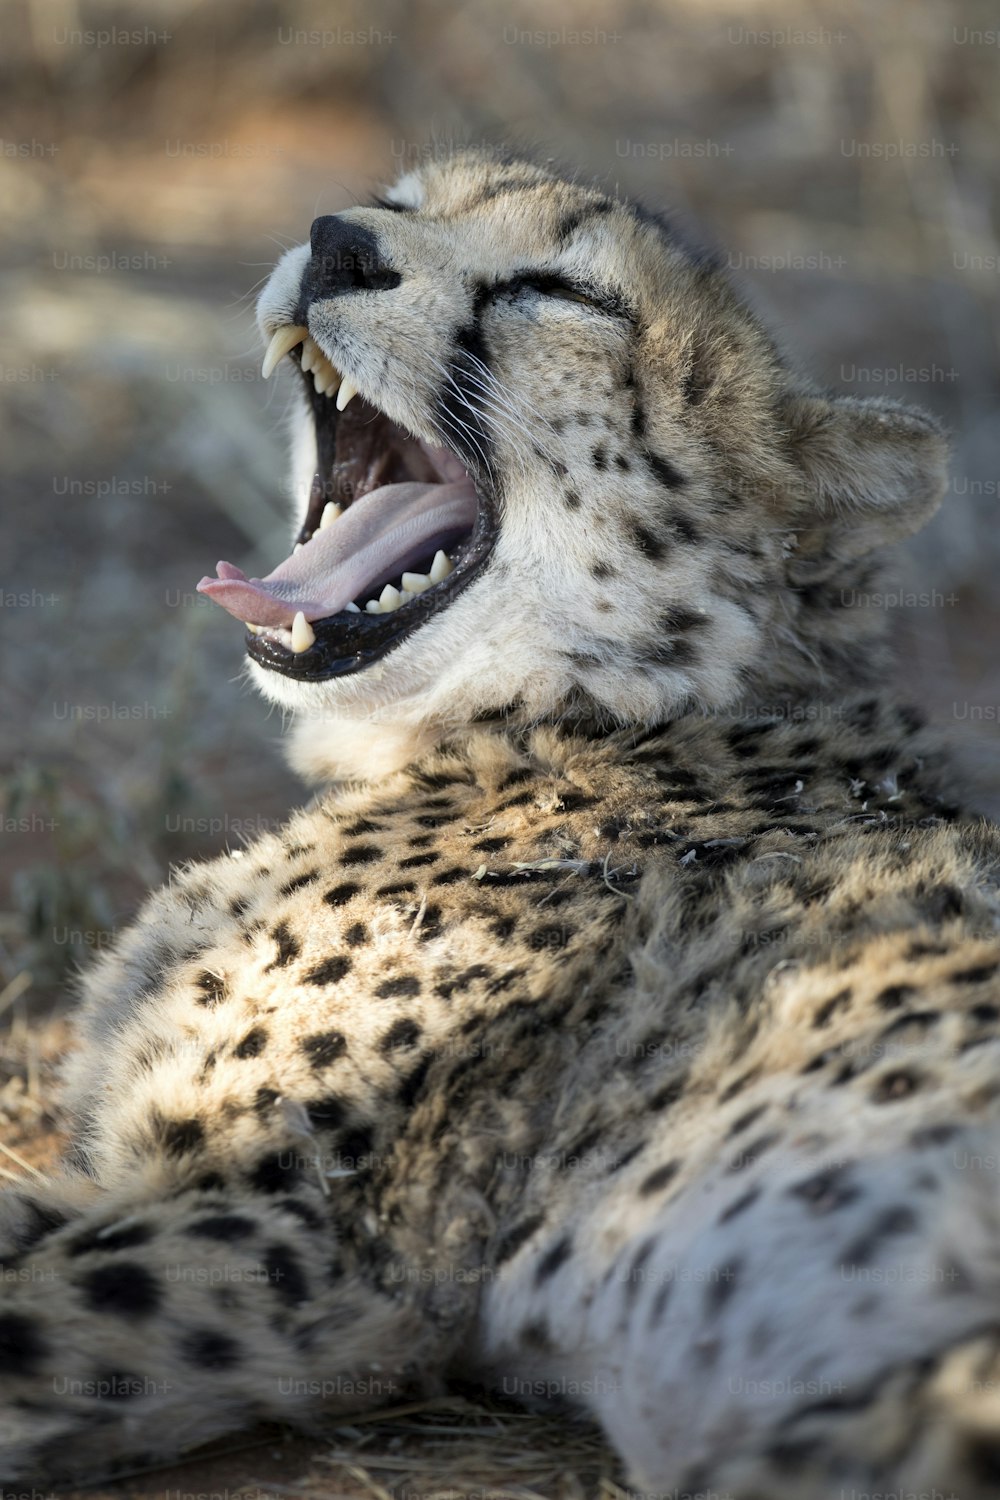 Cheetah yawning as it rests.